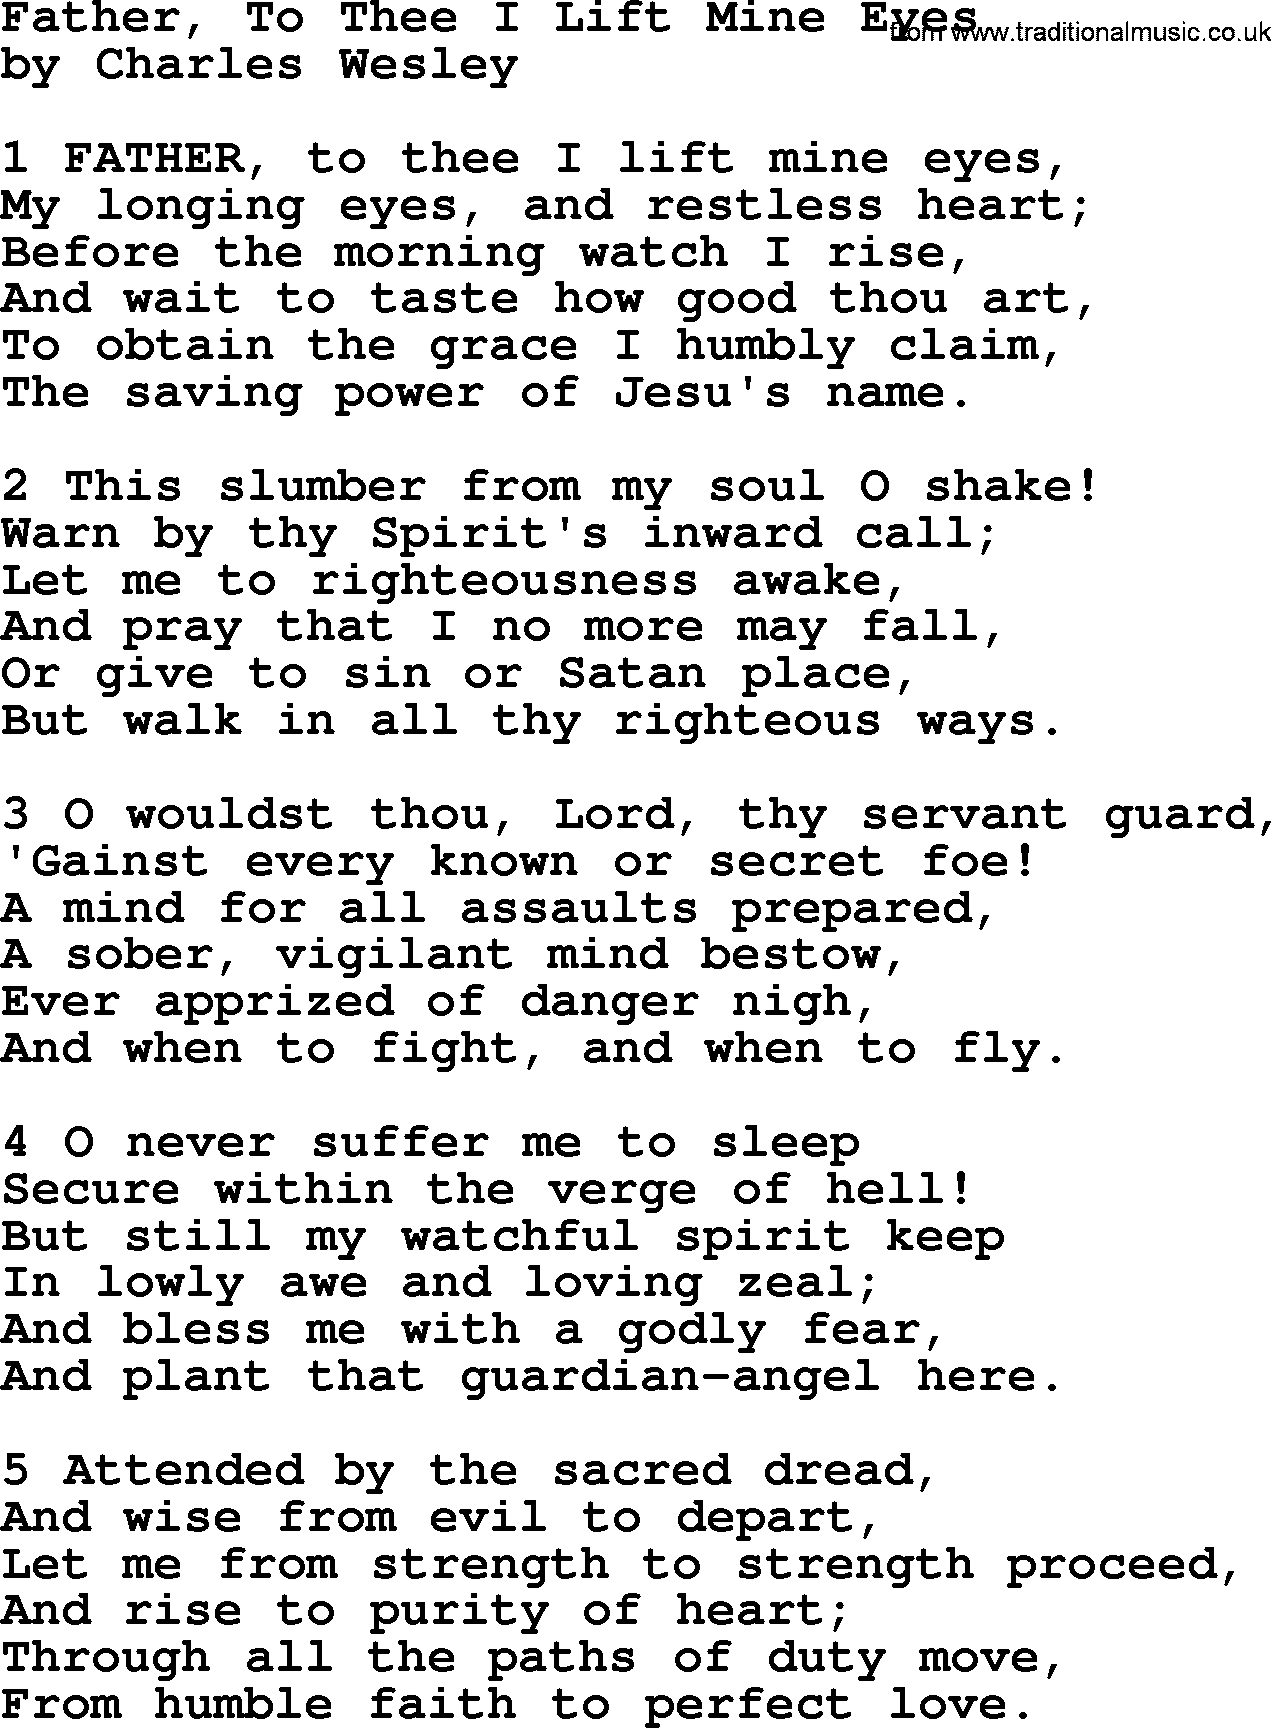 Charles Wesley hymn: Father, To Thee I Lift Mine Eyes, lyrics